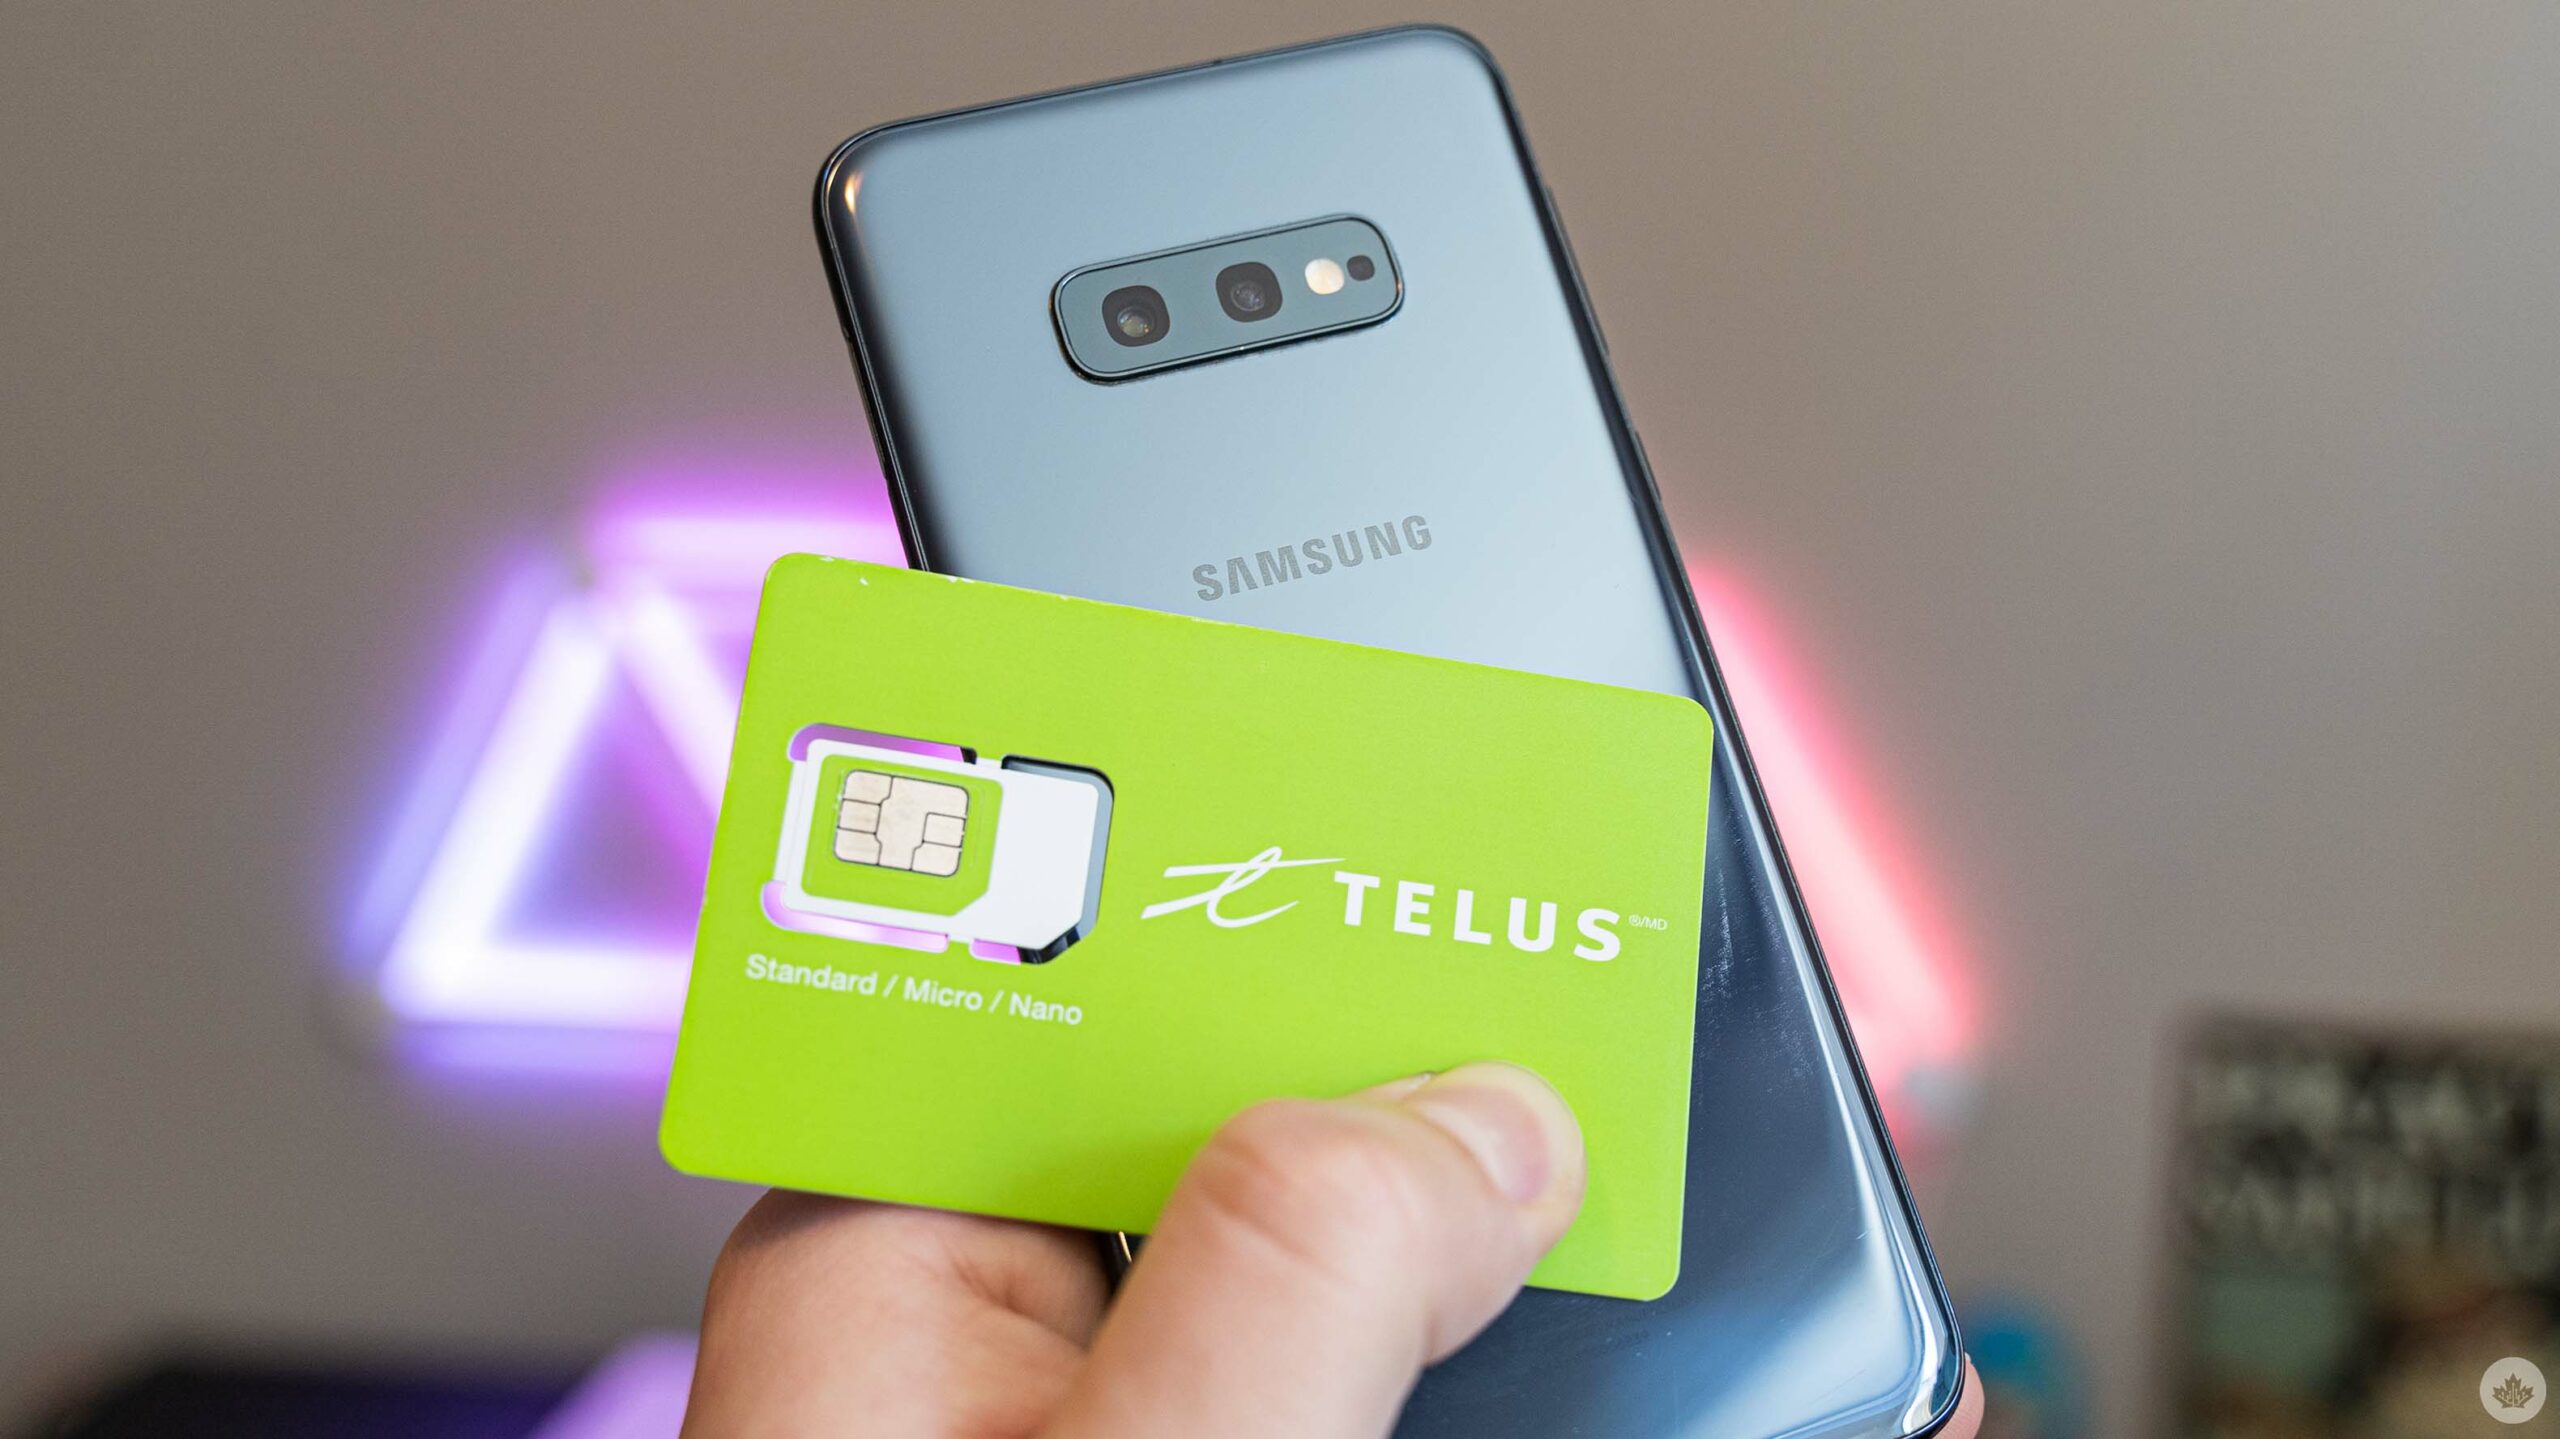 Samsung smartphone and a Telus SIM card